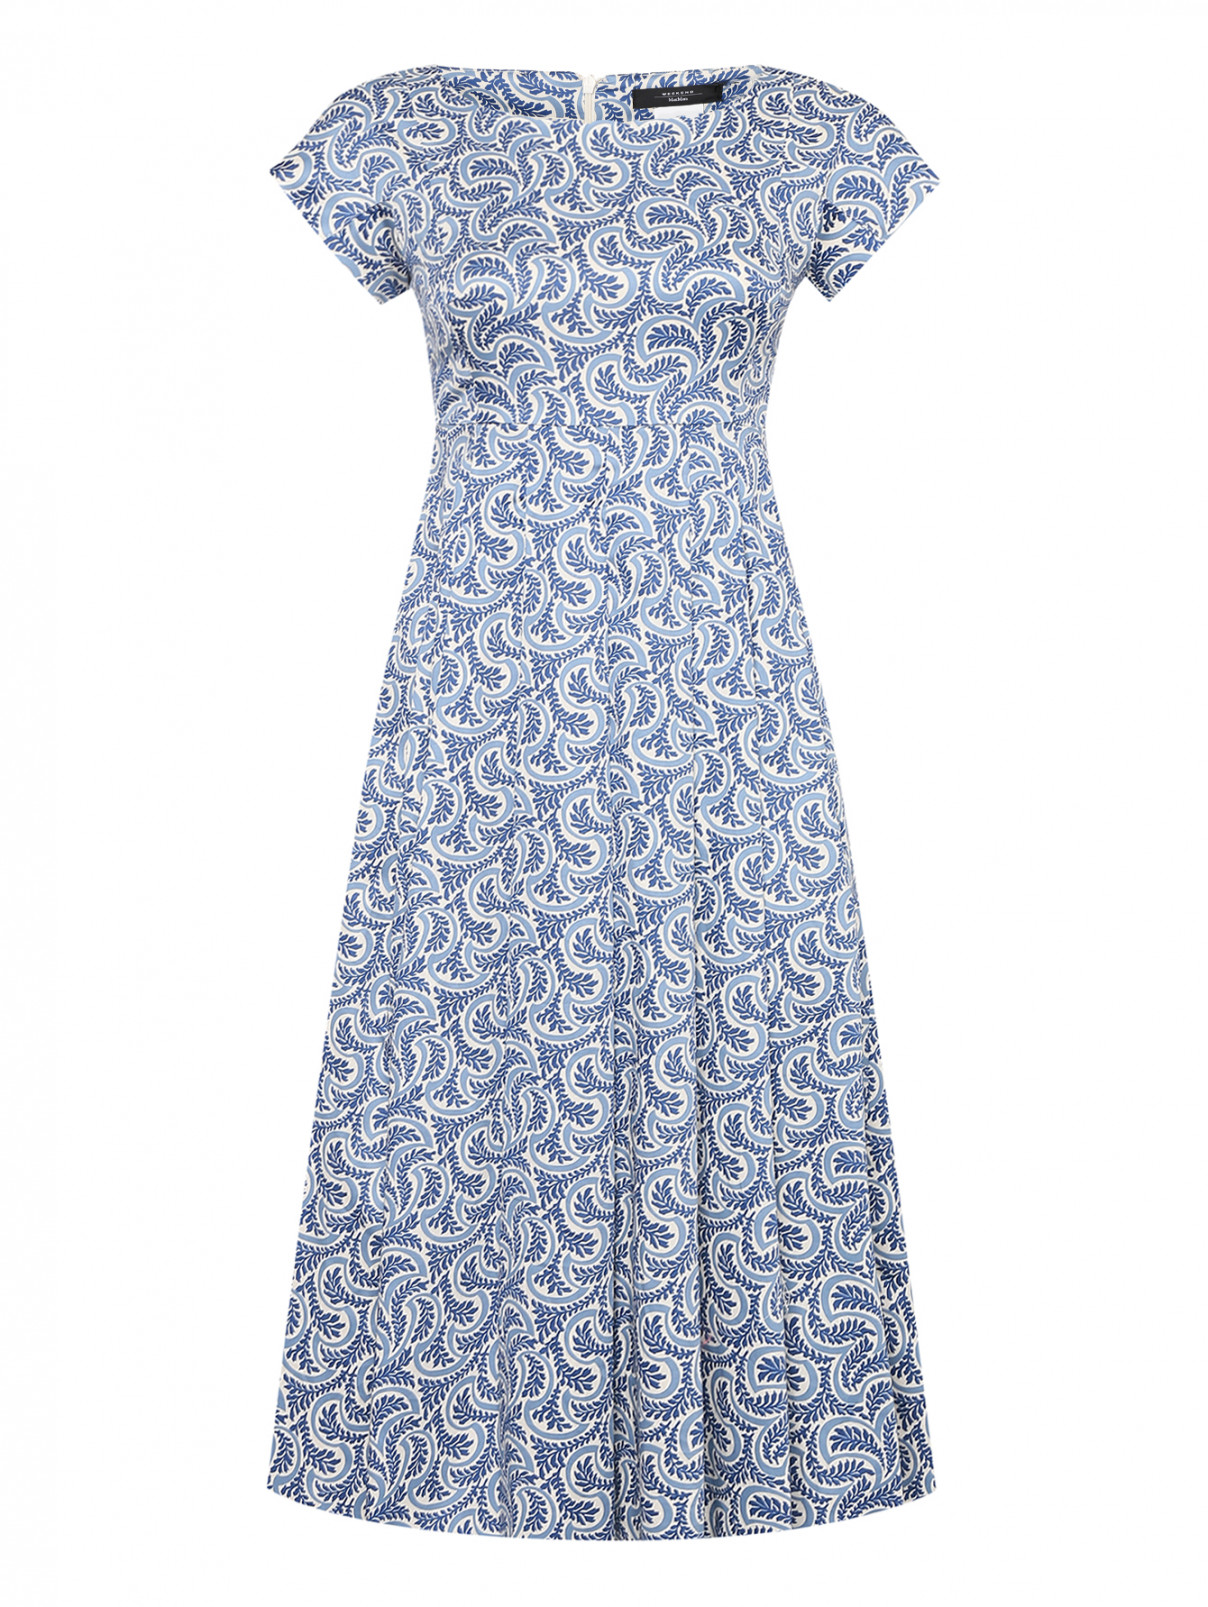 Платье-миди с карманами Weekend Max Mara  –  Общий вид  – Цвет:  Синий